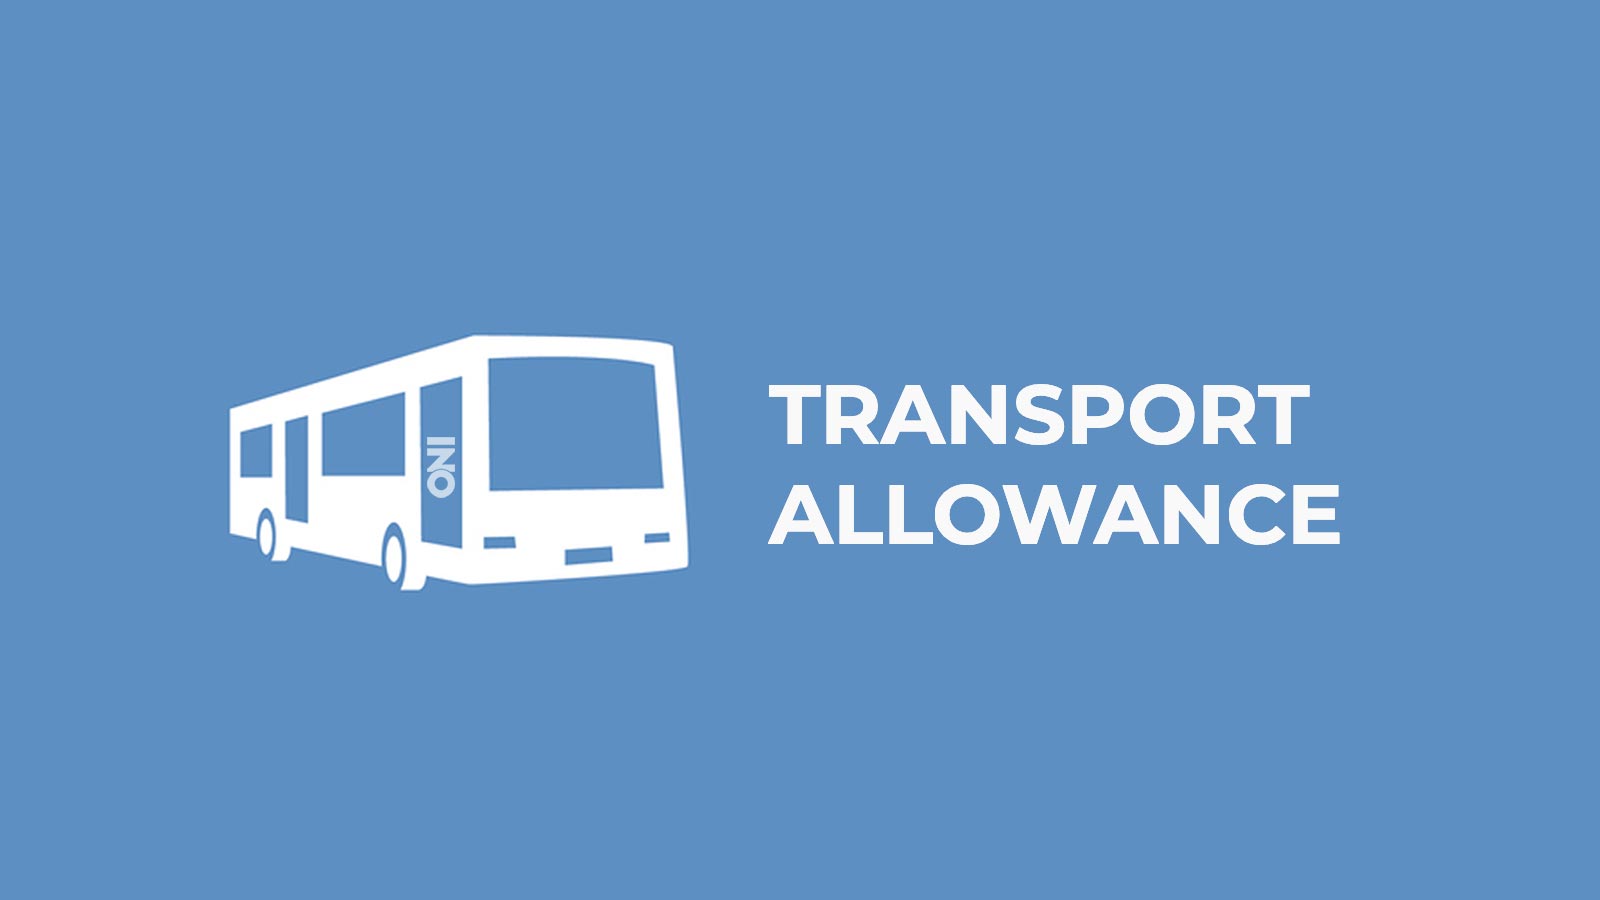 Travel Transport Allowance to Odisha Students